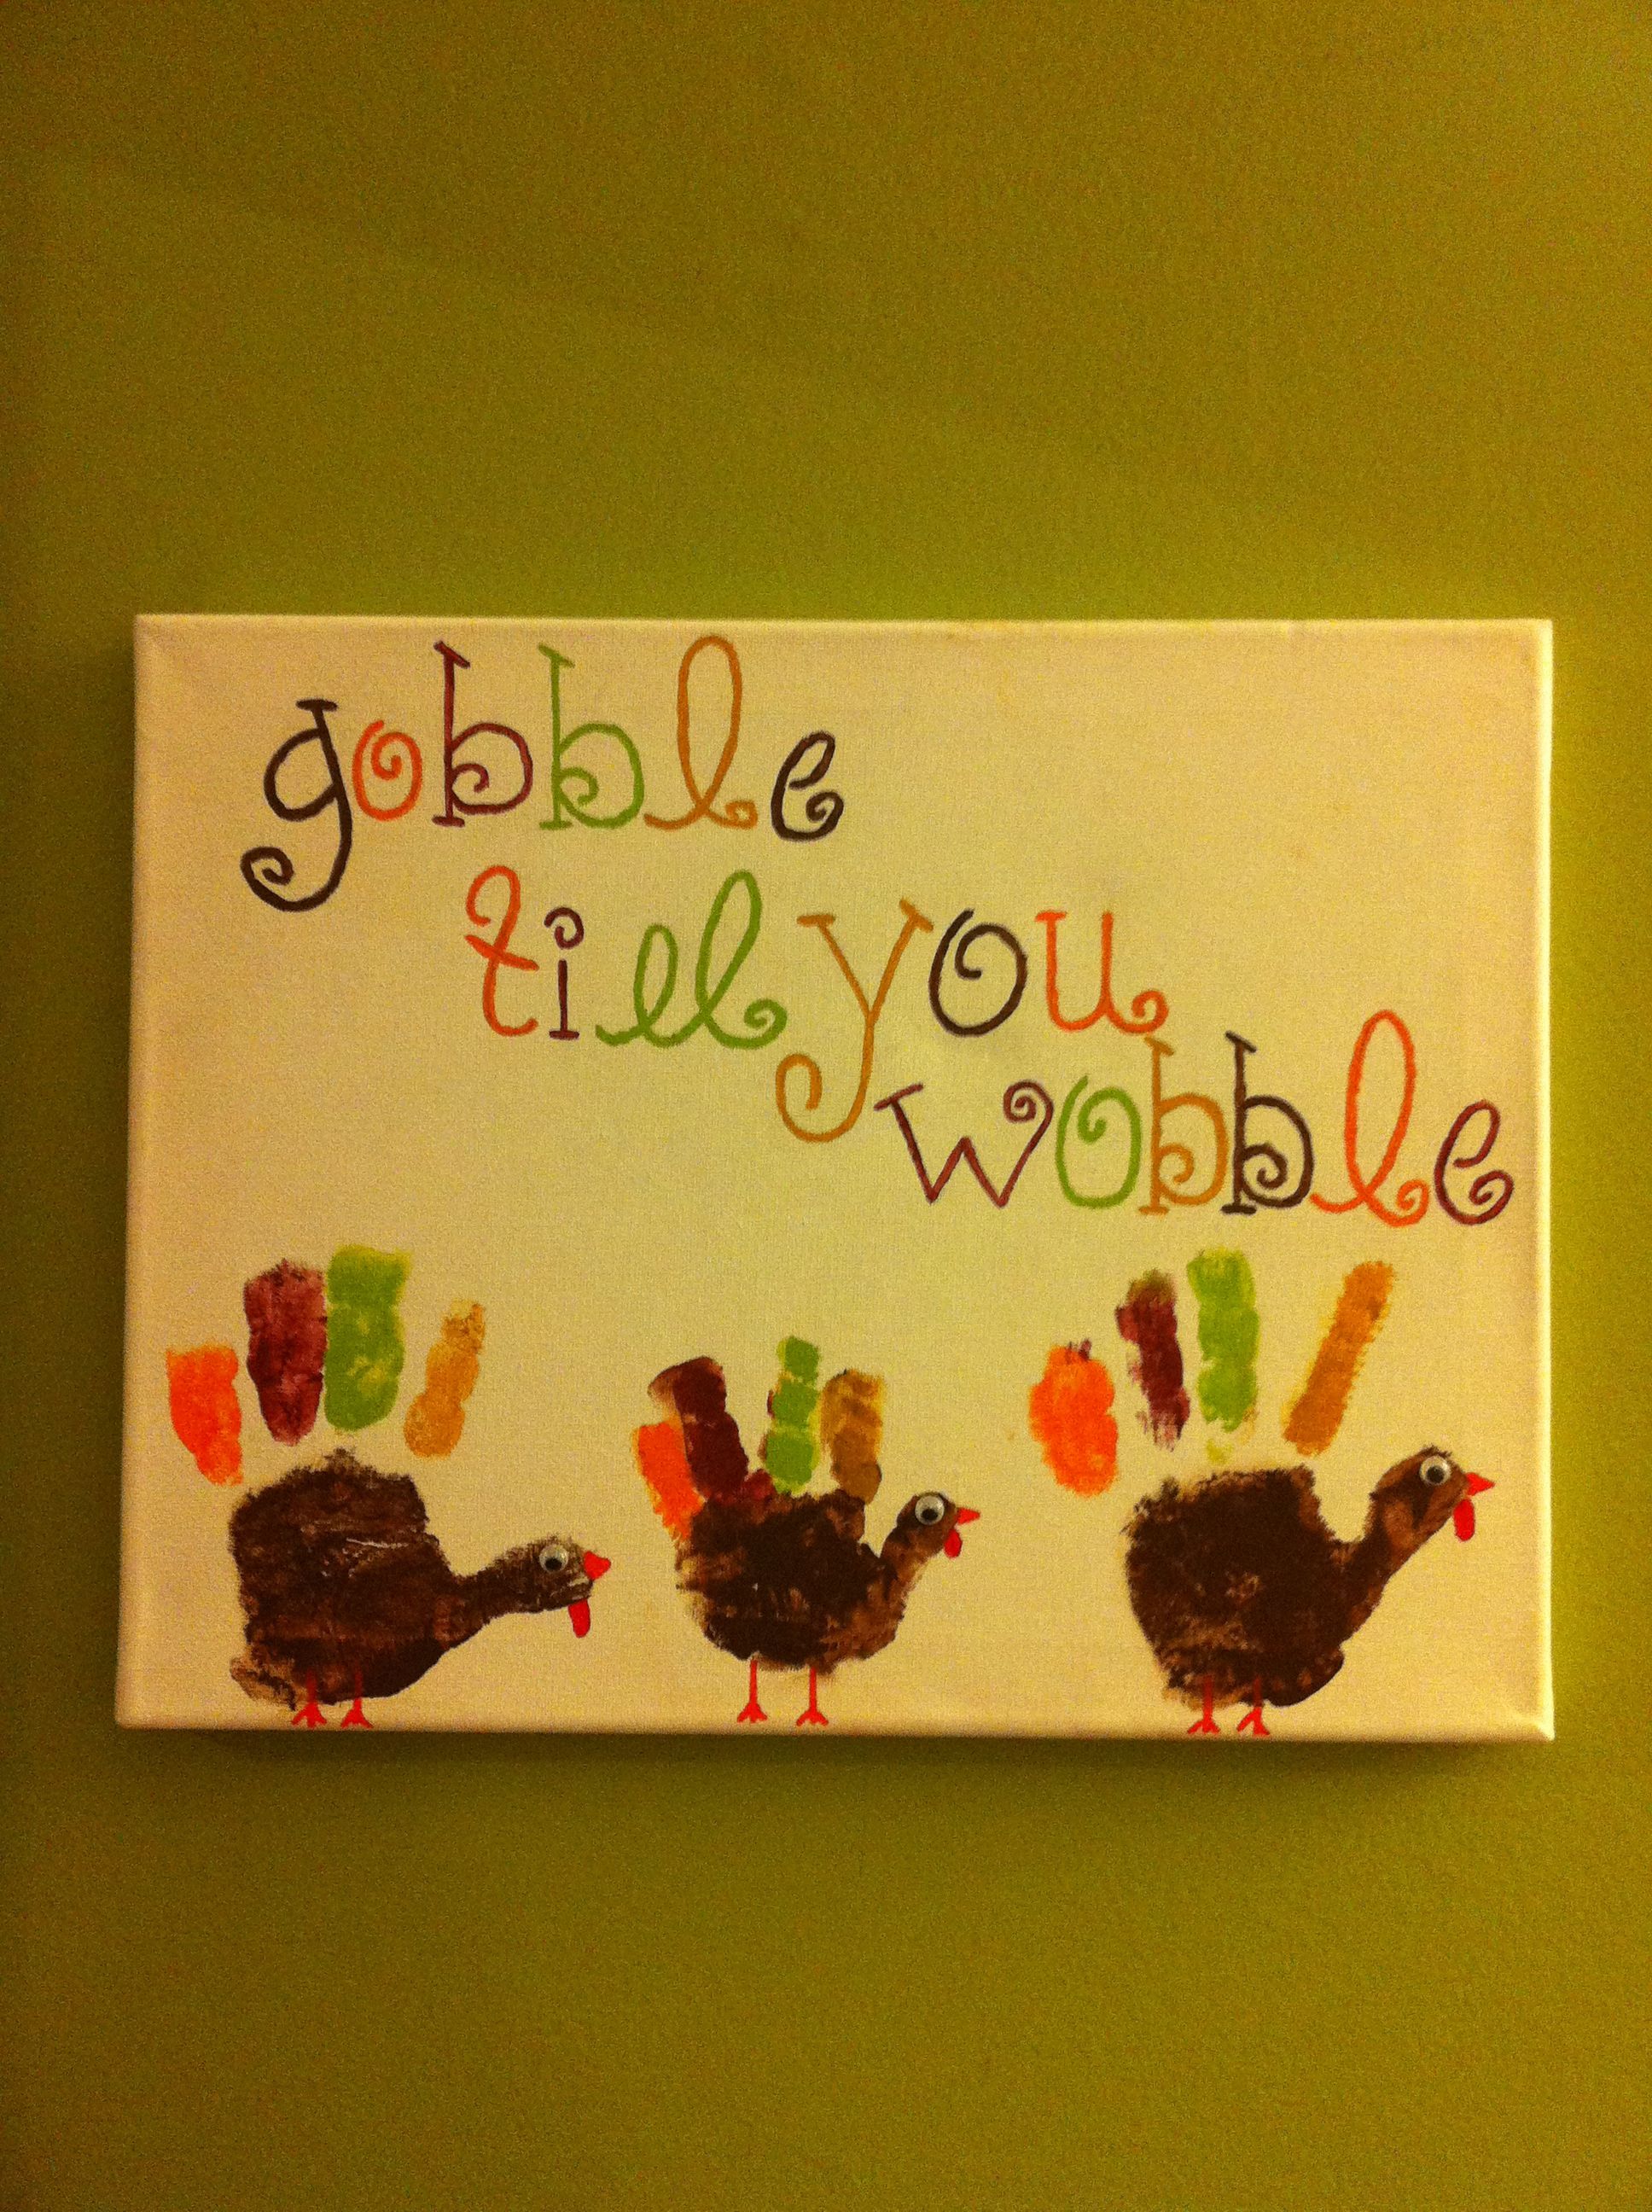 Turkey handprints. “Gobble til you wobble” …..(would make a cute tshirt print!!)